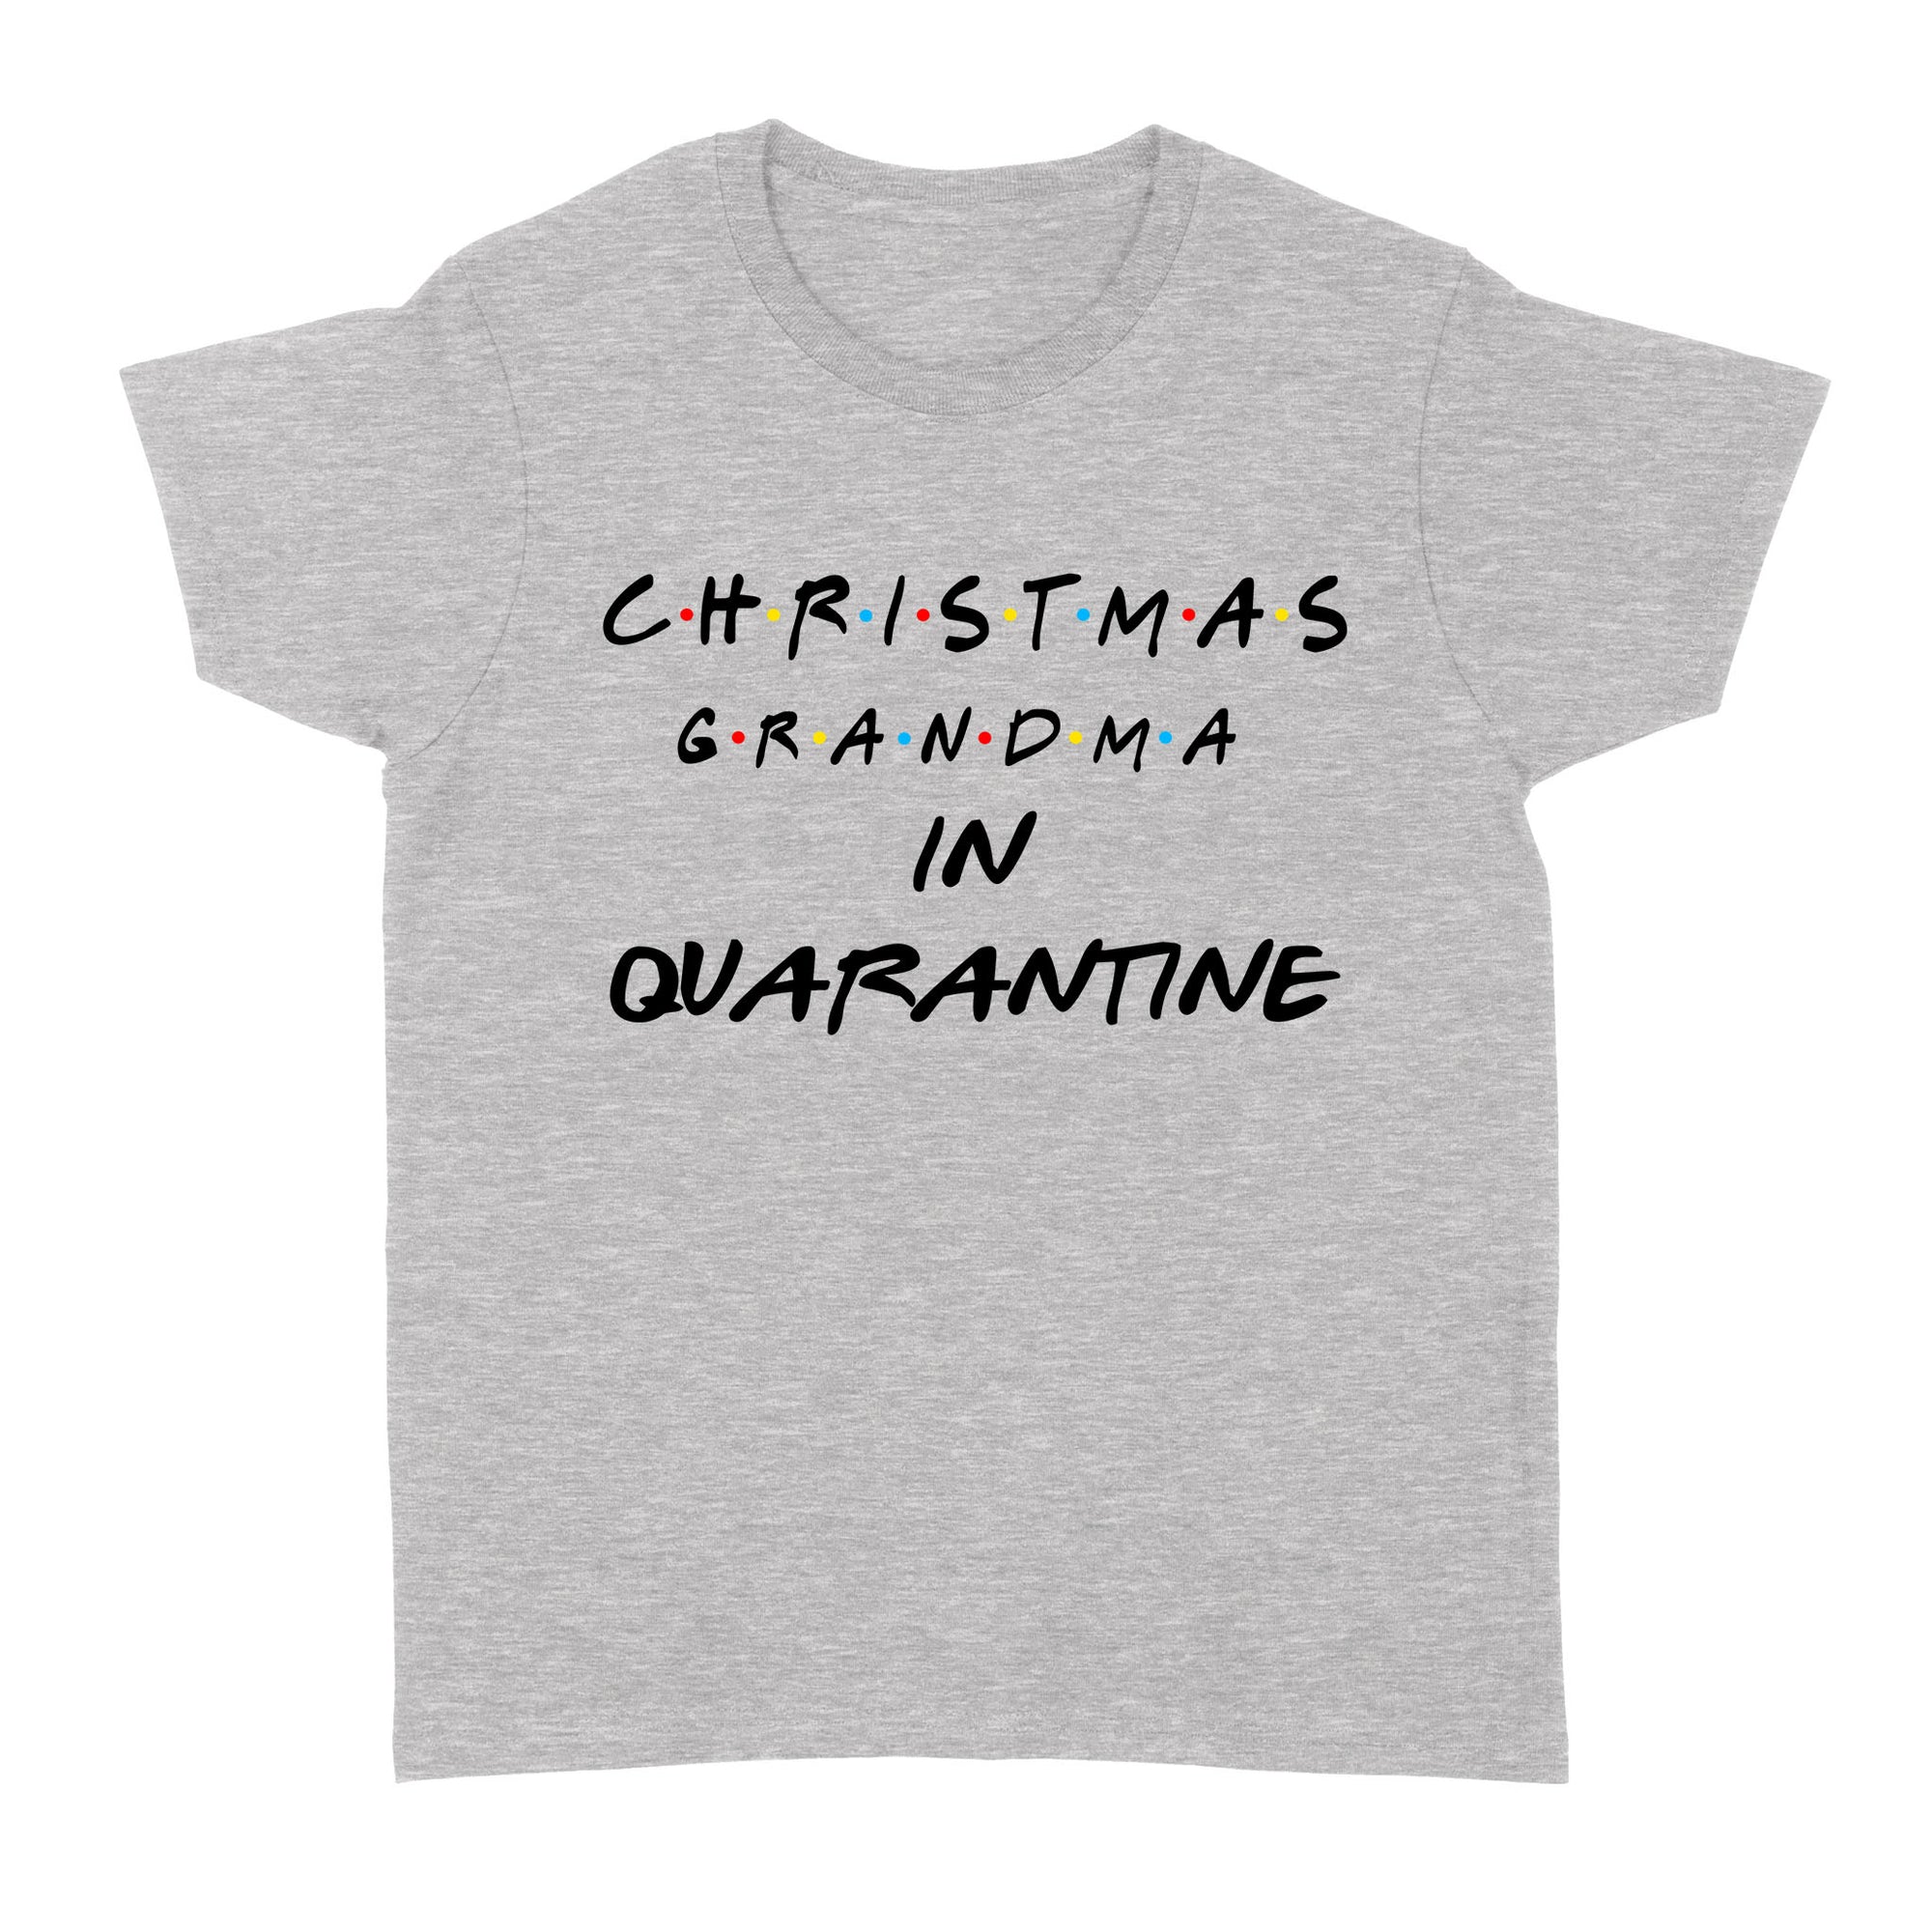 Christmas Grandma 2020 Gift Ideas in Quarantine Funny b for Grandma Standard Women's T-shirt